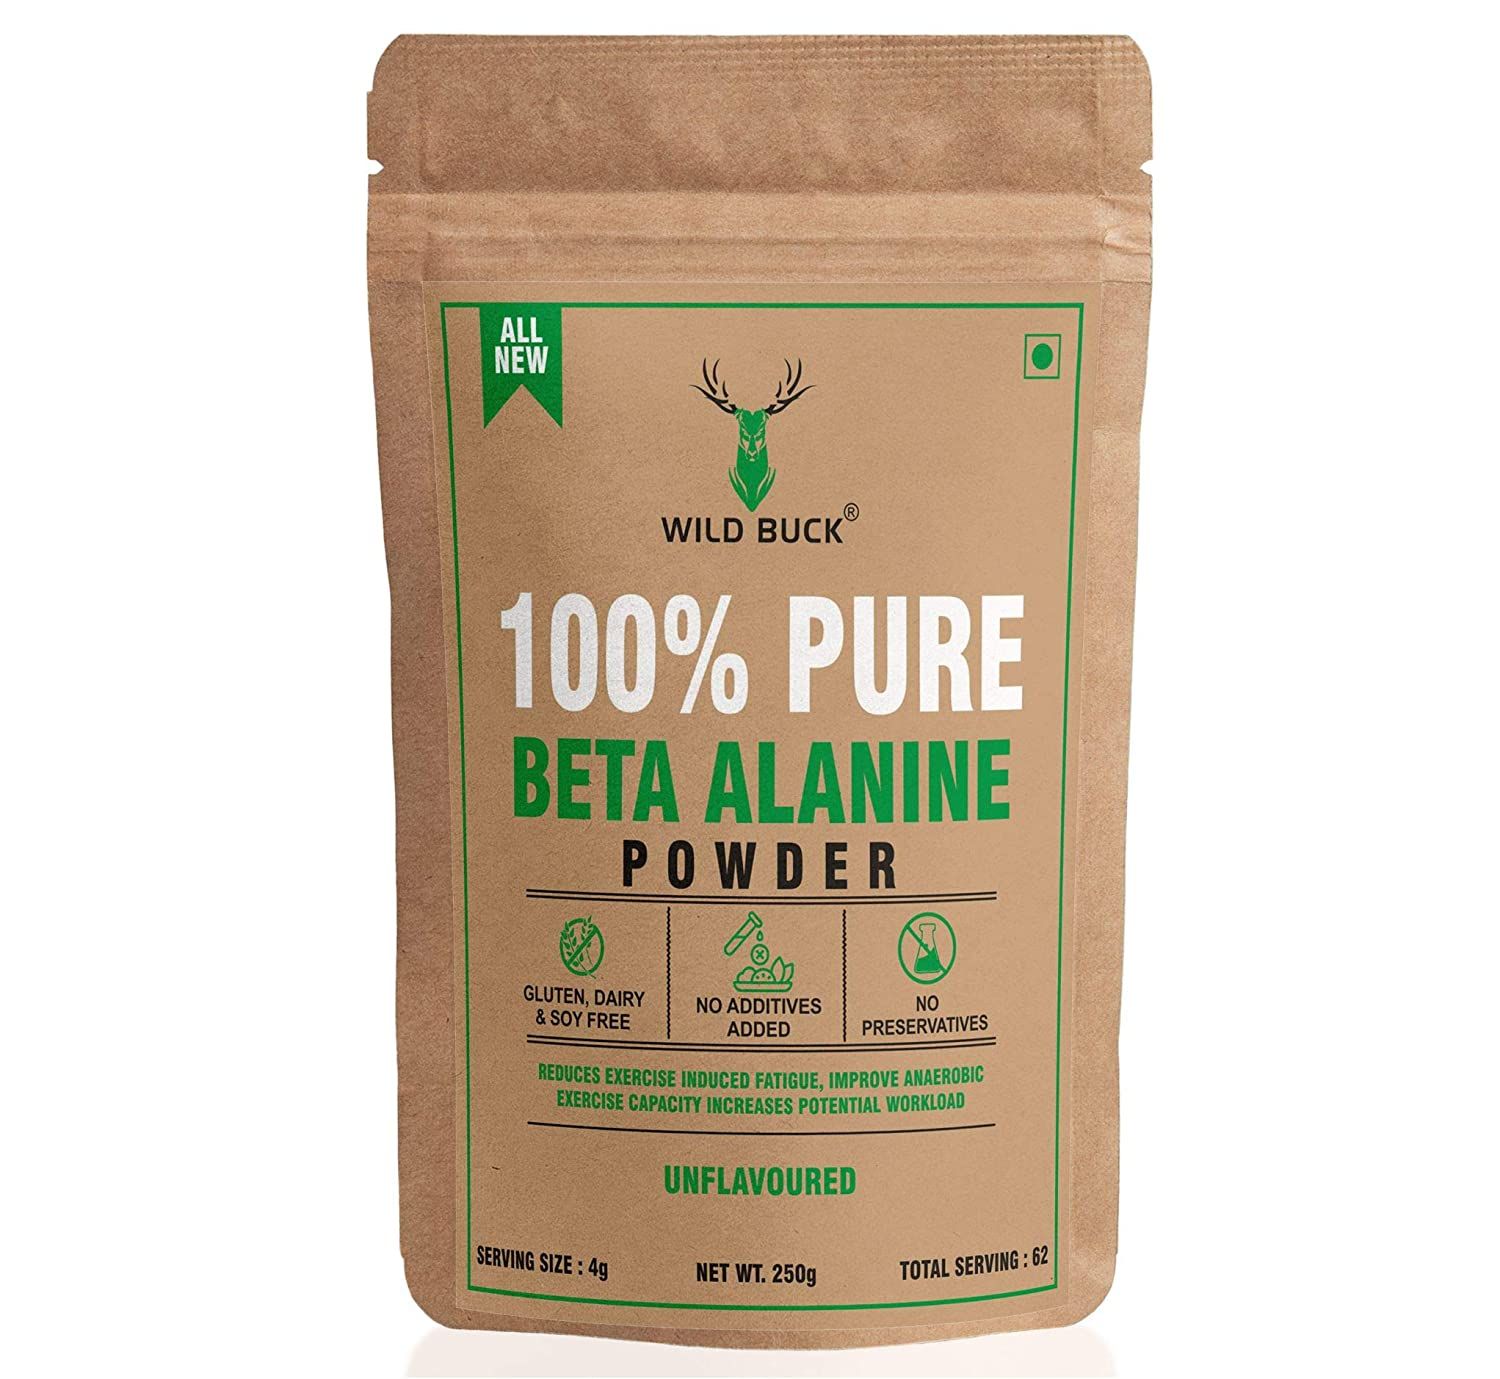 Wild Buck 100% Pure Beta Alanine Powder Image